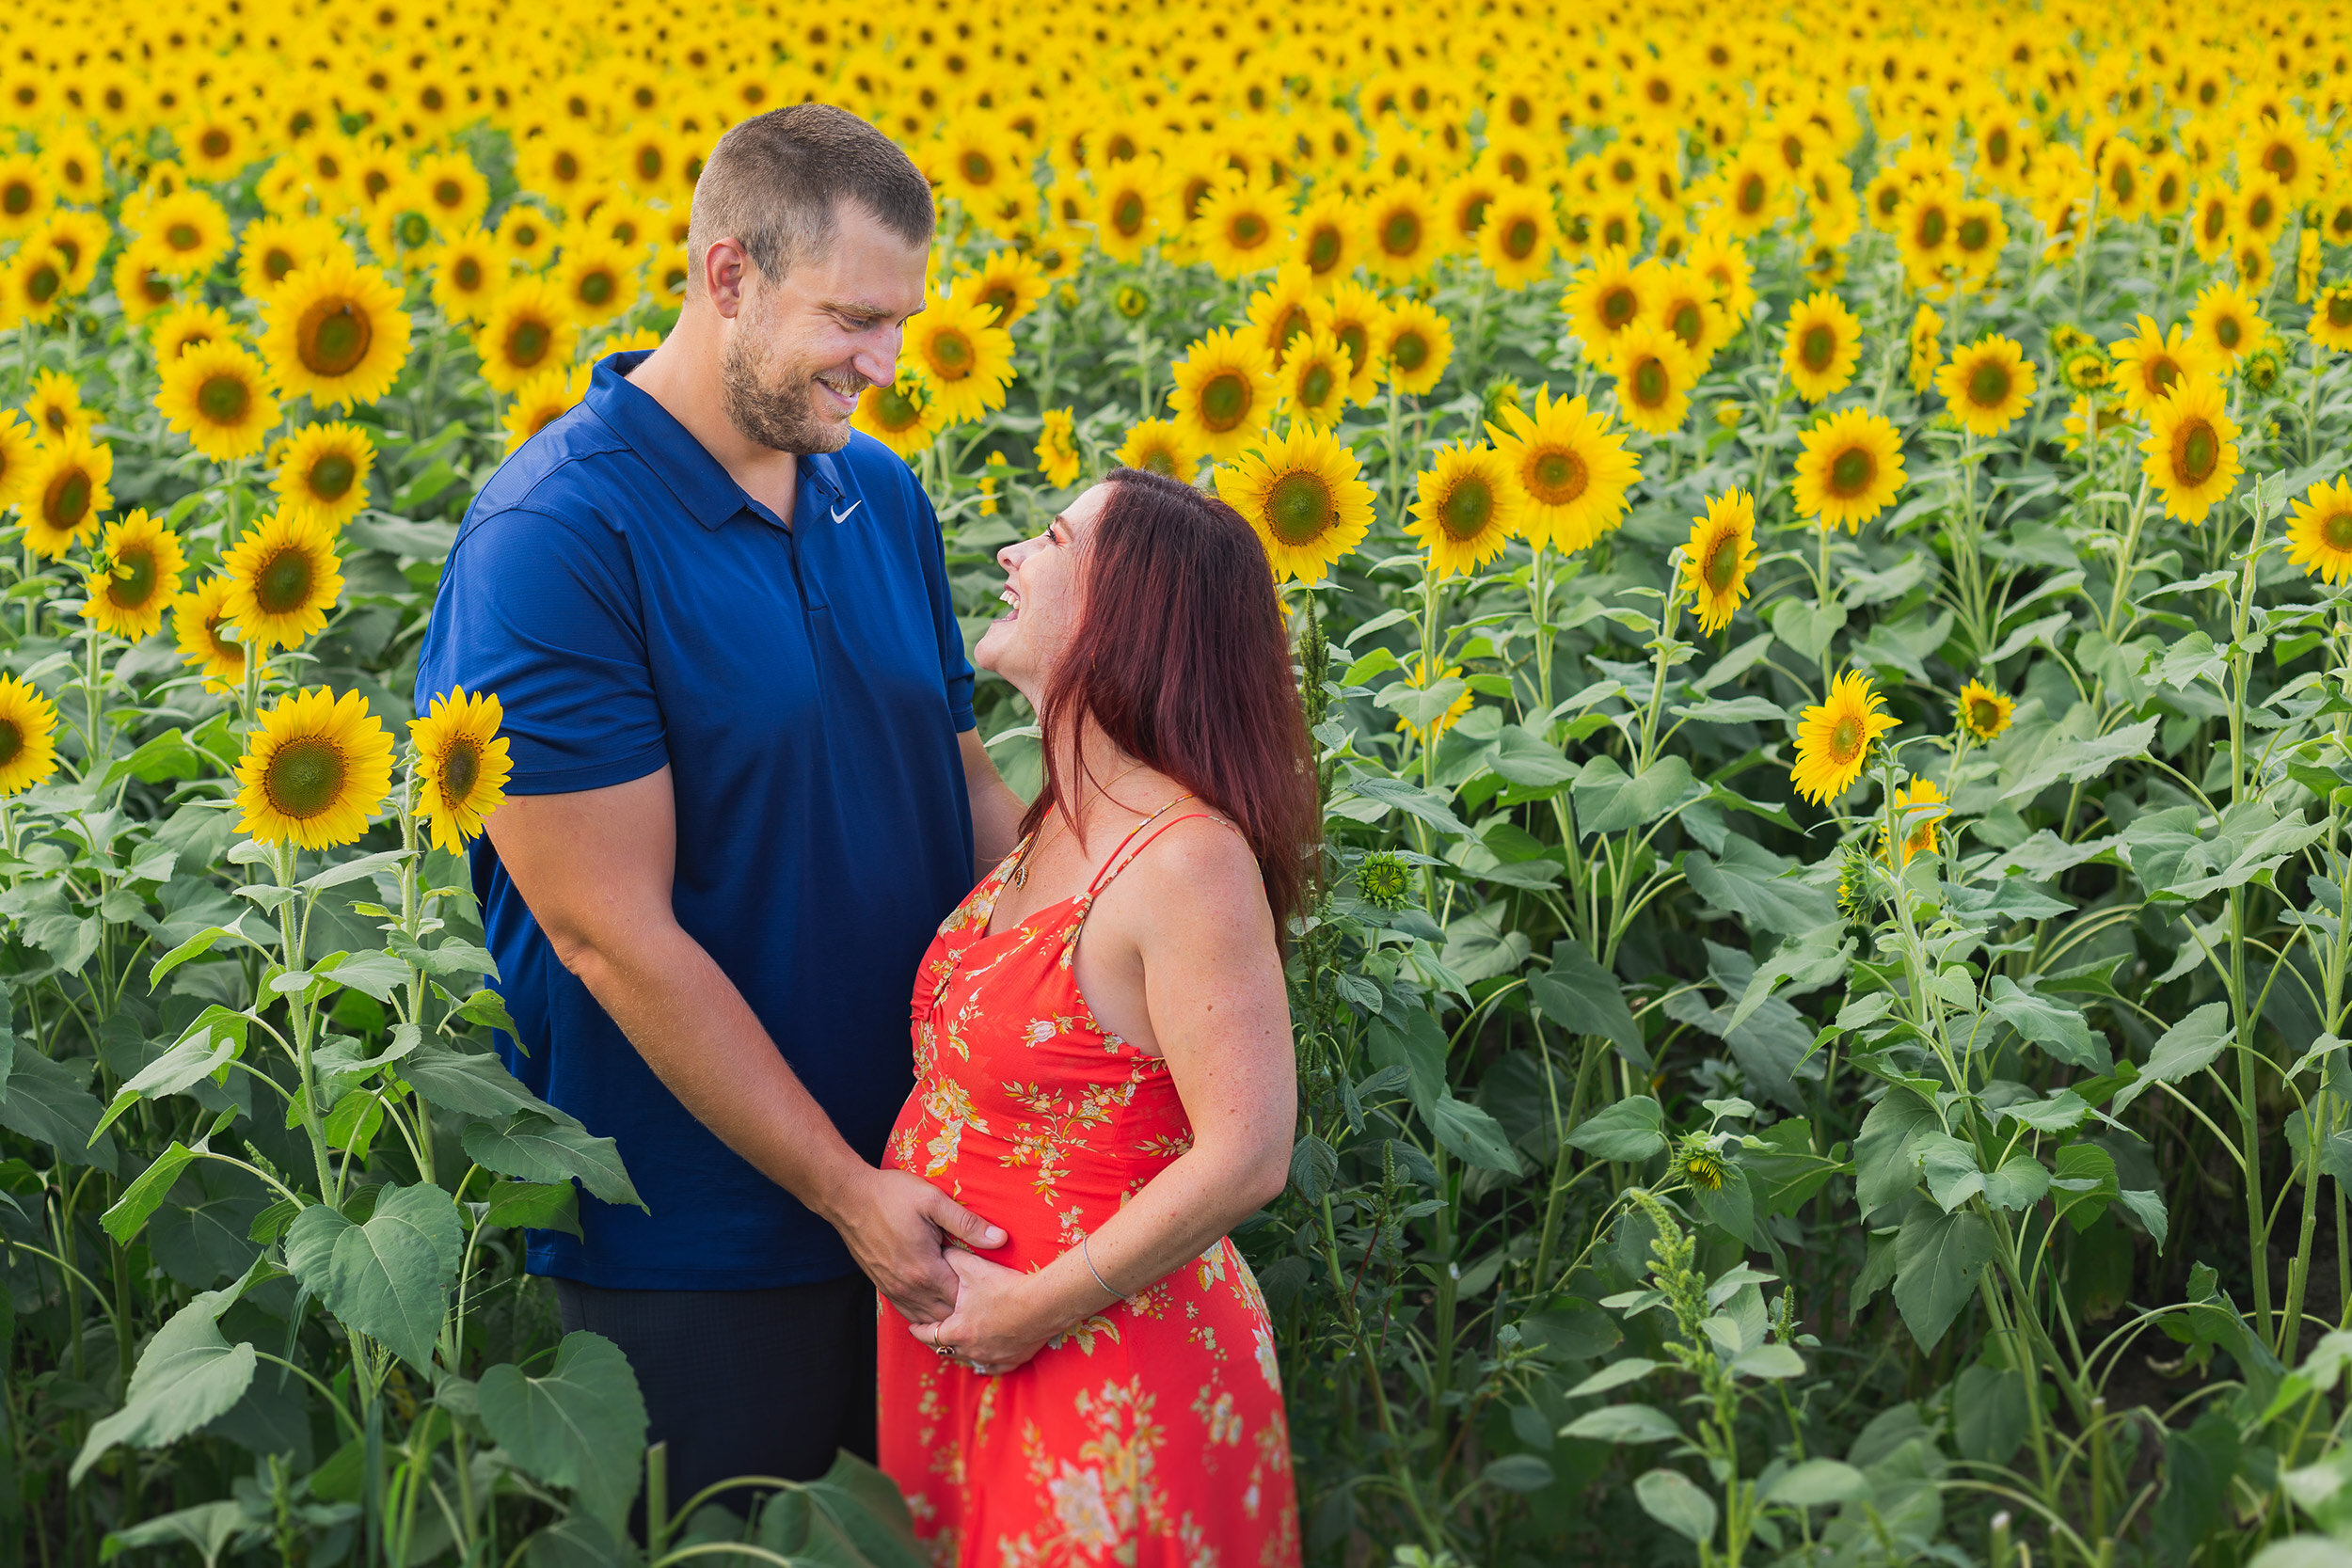 Colby Farm Sunflower Mini-Session Maternity Portrait | Stephen Grant Photography